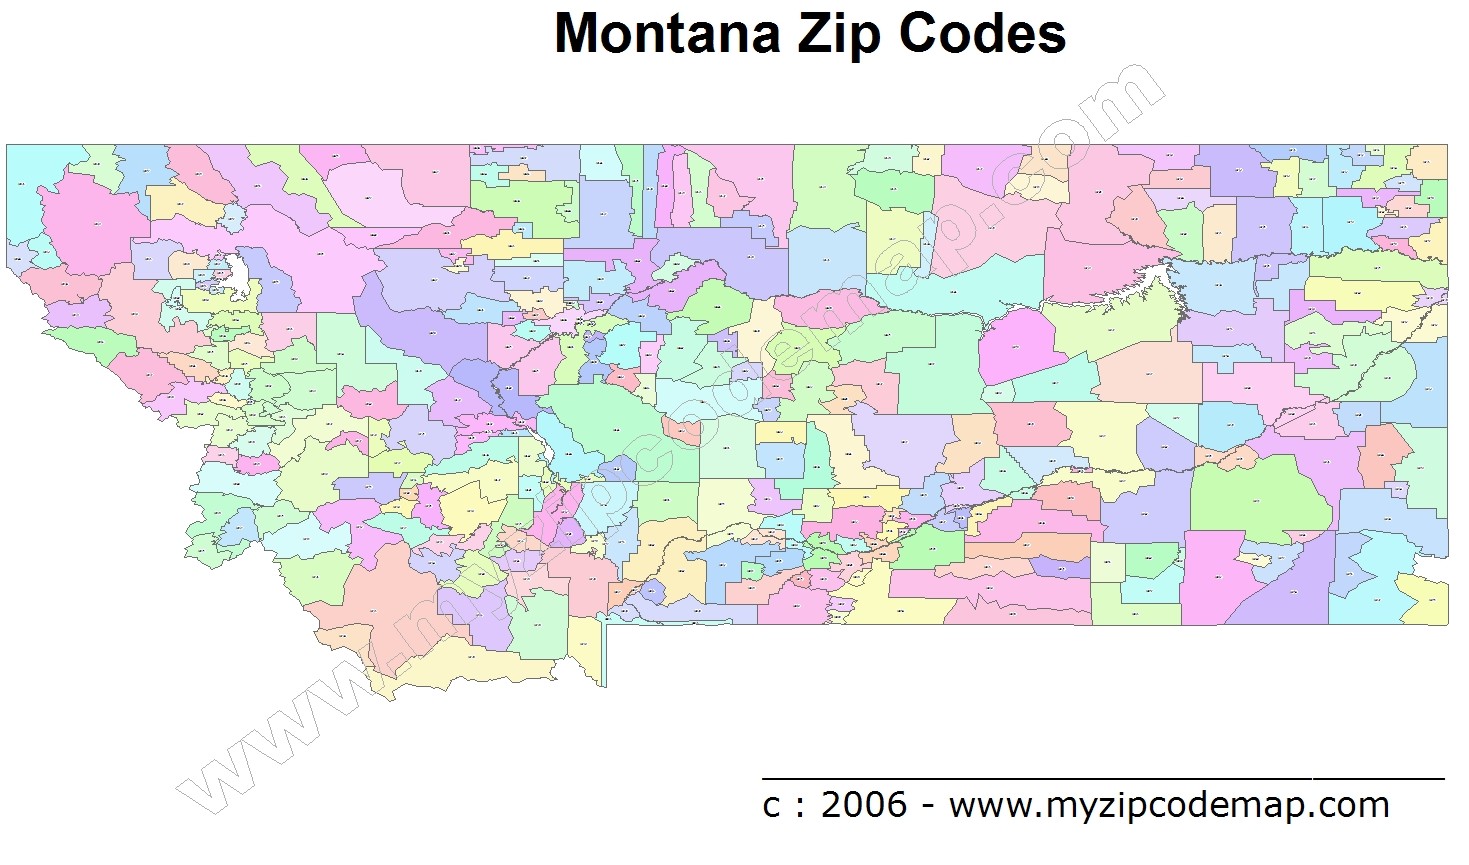 Montana Zip Code Maps Free Montana Zip Code Maps